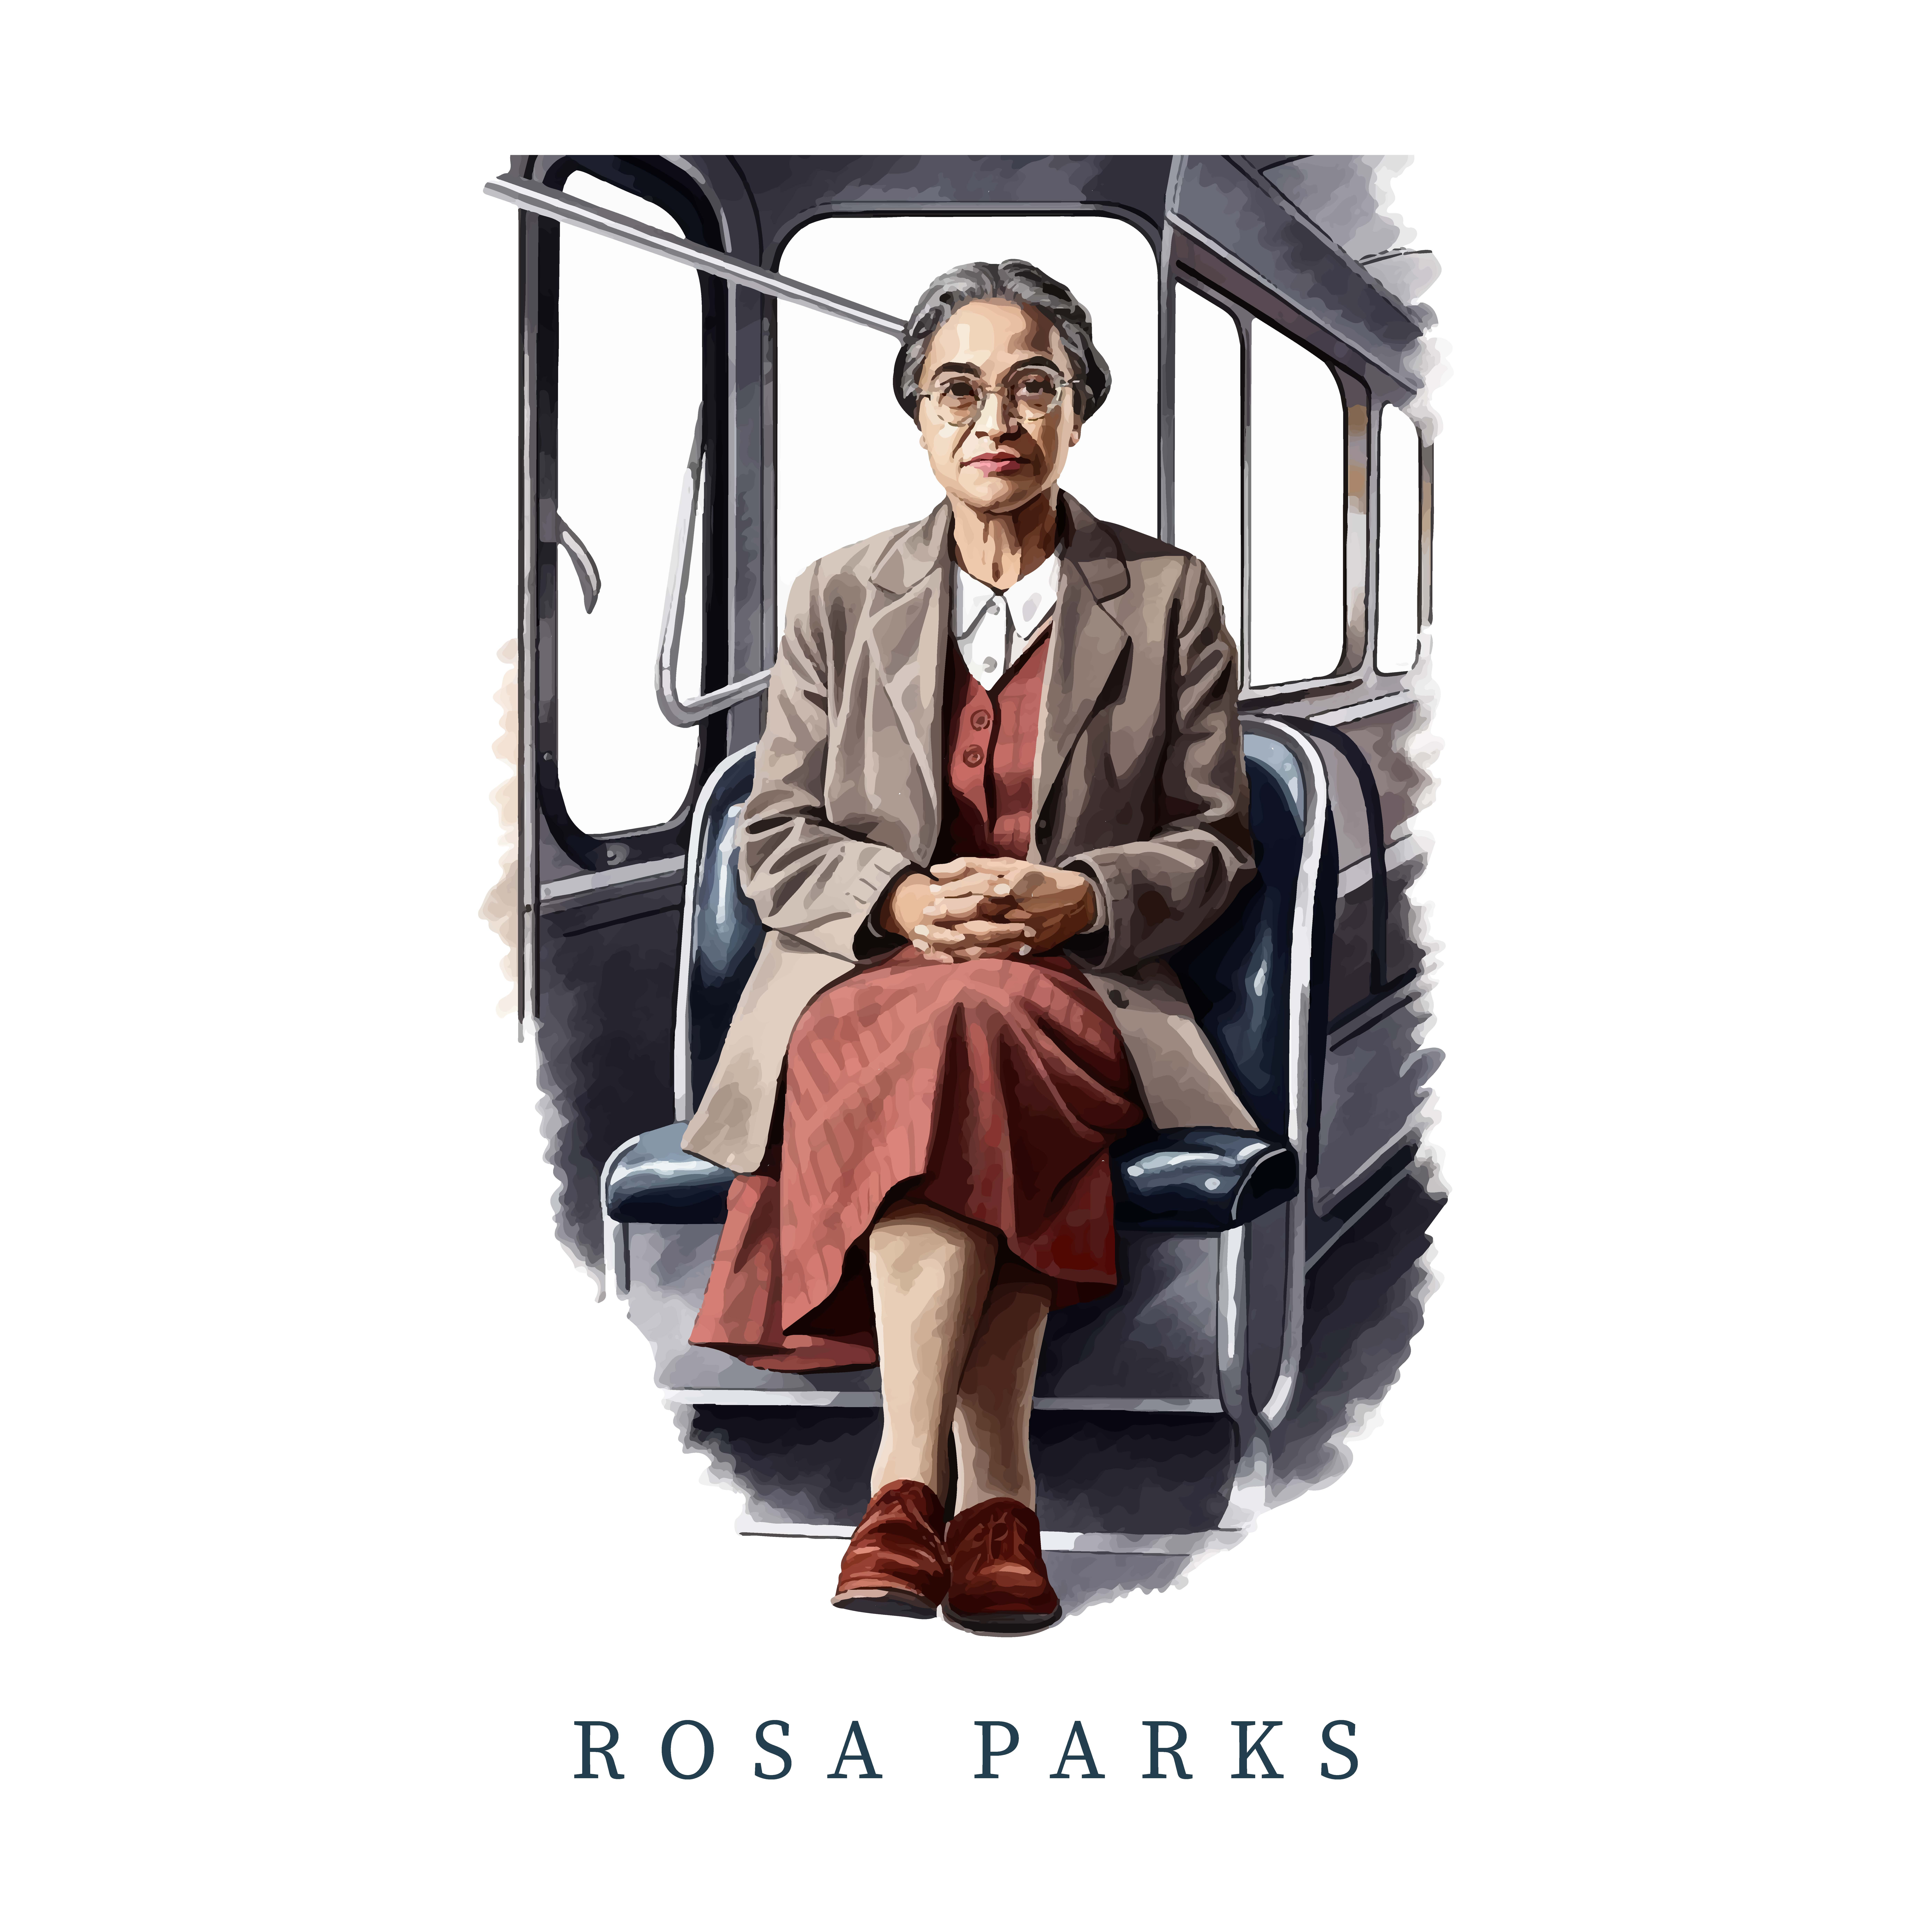 RPJ Partner Deena Merlen’s Reflections on Rosa Parks and the Montgomery Bus Boycott